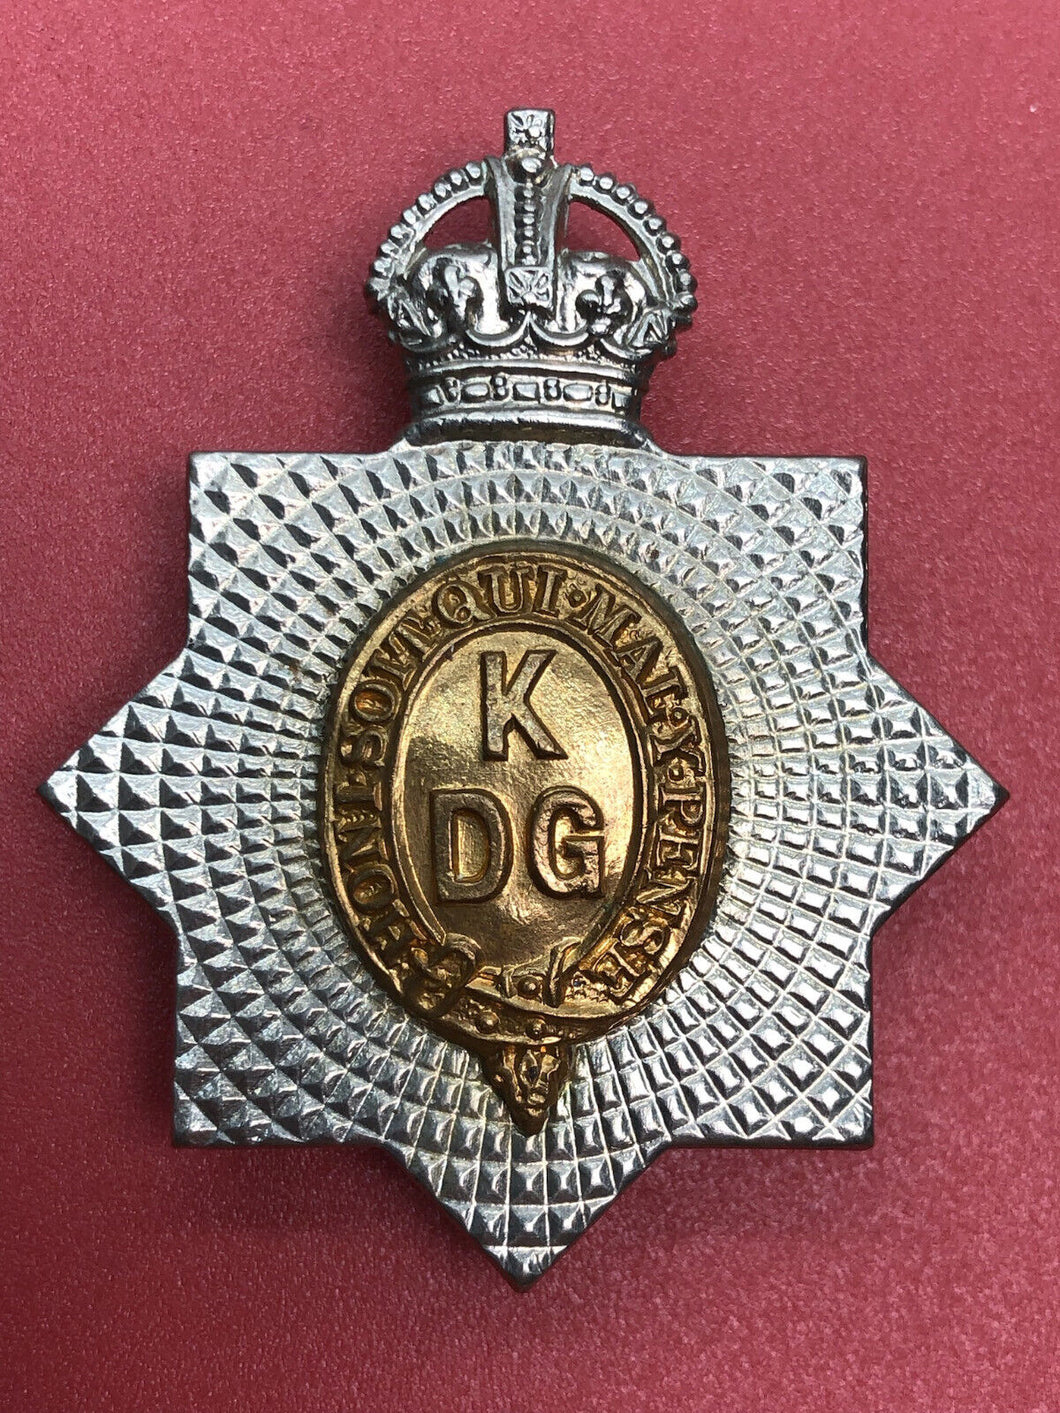 Original WW2 British Army Cap Badge - 1st Kings Dragoon Guards